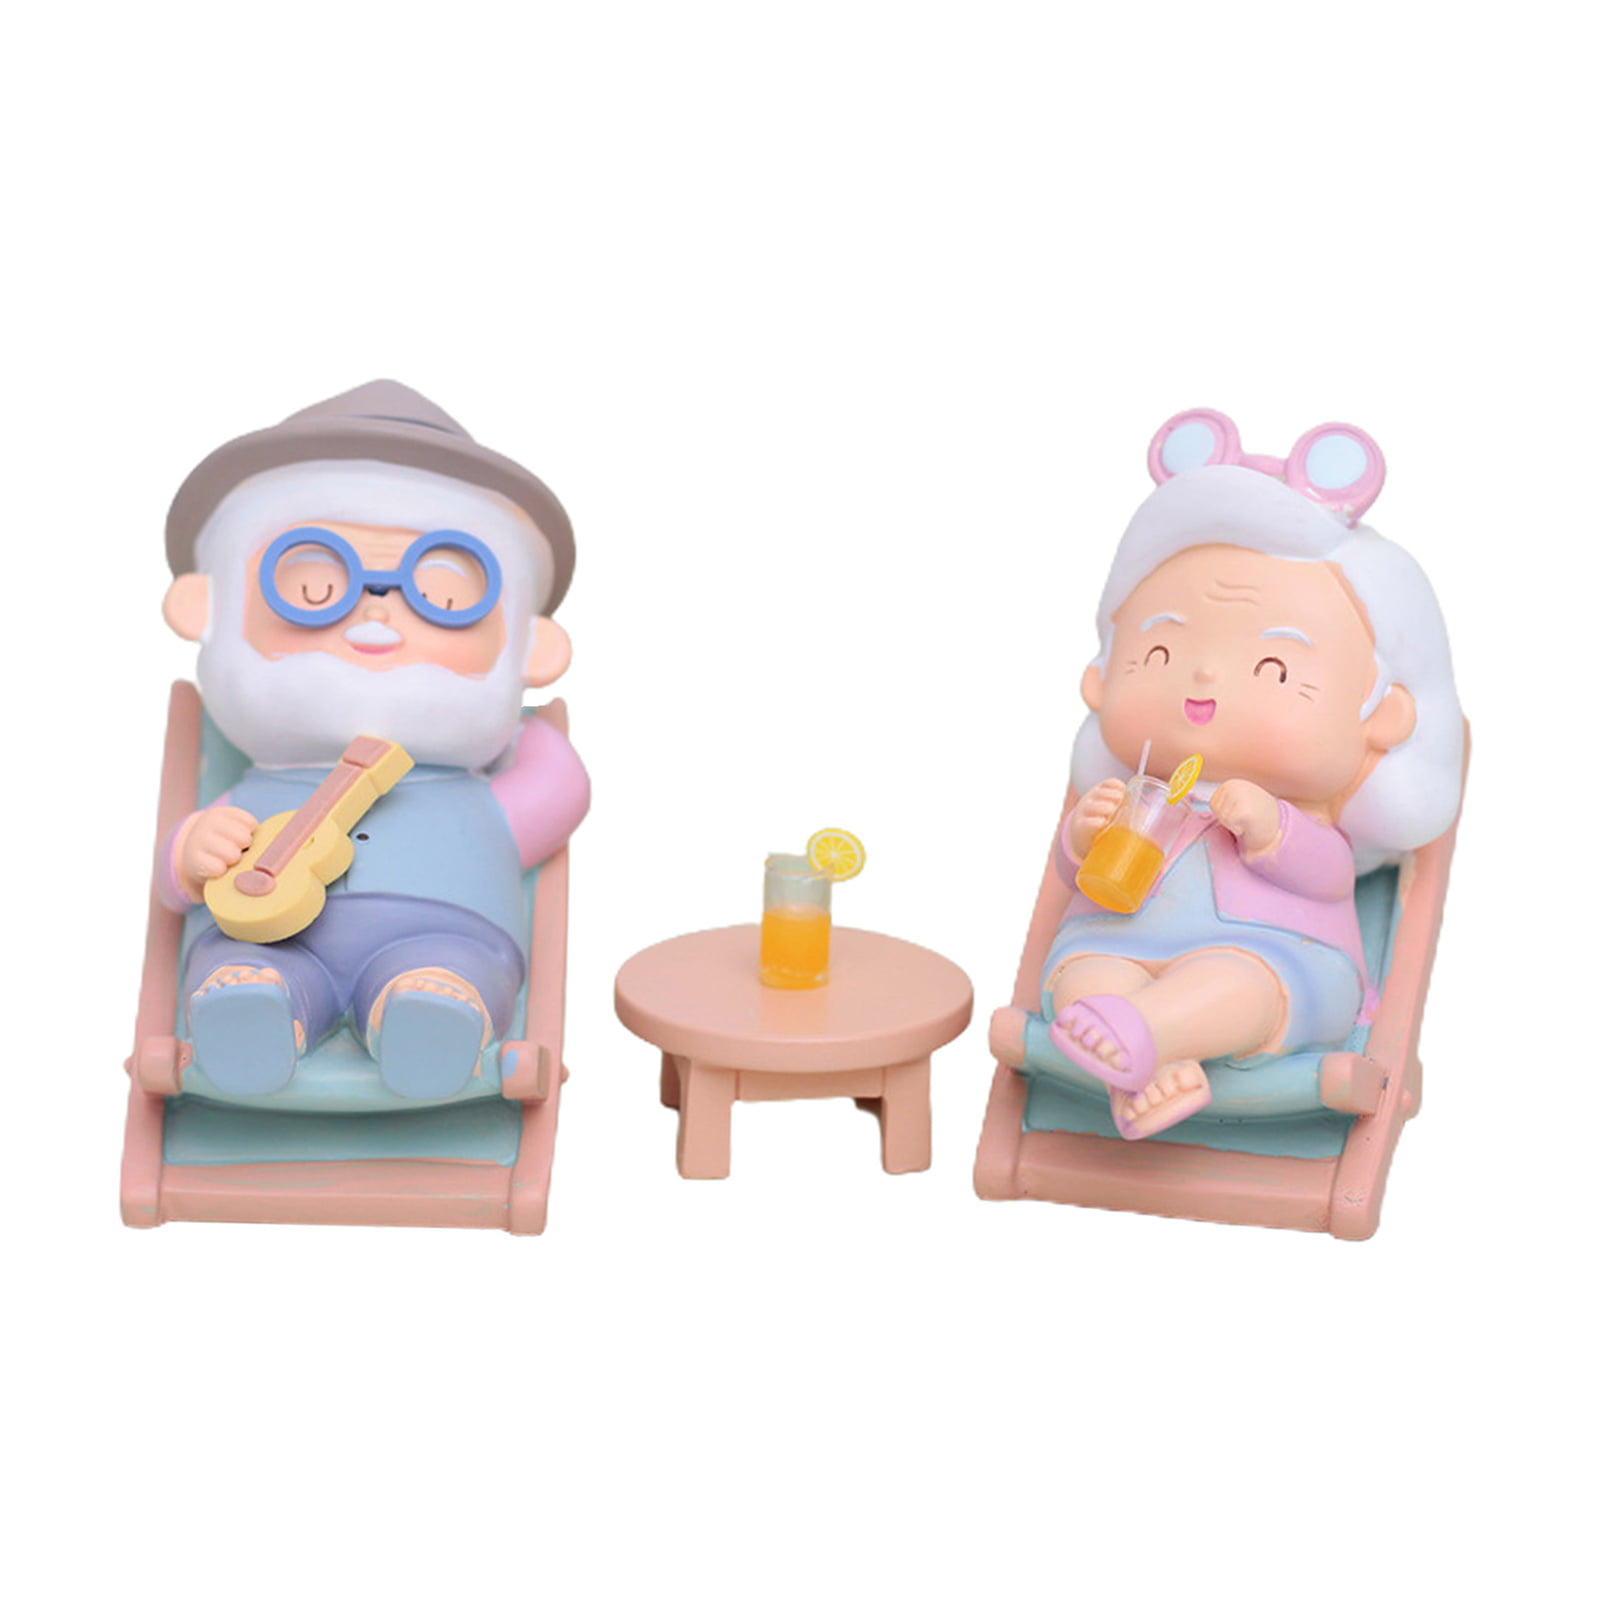 Miniature Dollhouse FAIRY GARDEN Figurine ~ Snack Time For Squirrels w Grandma 